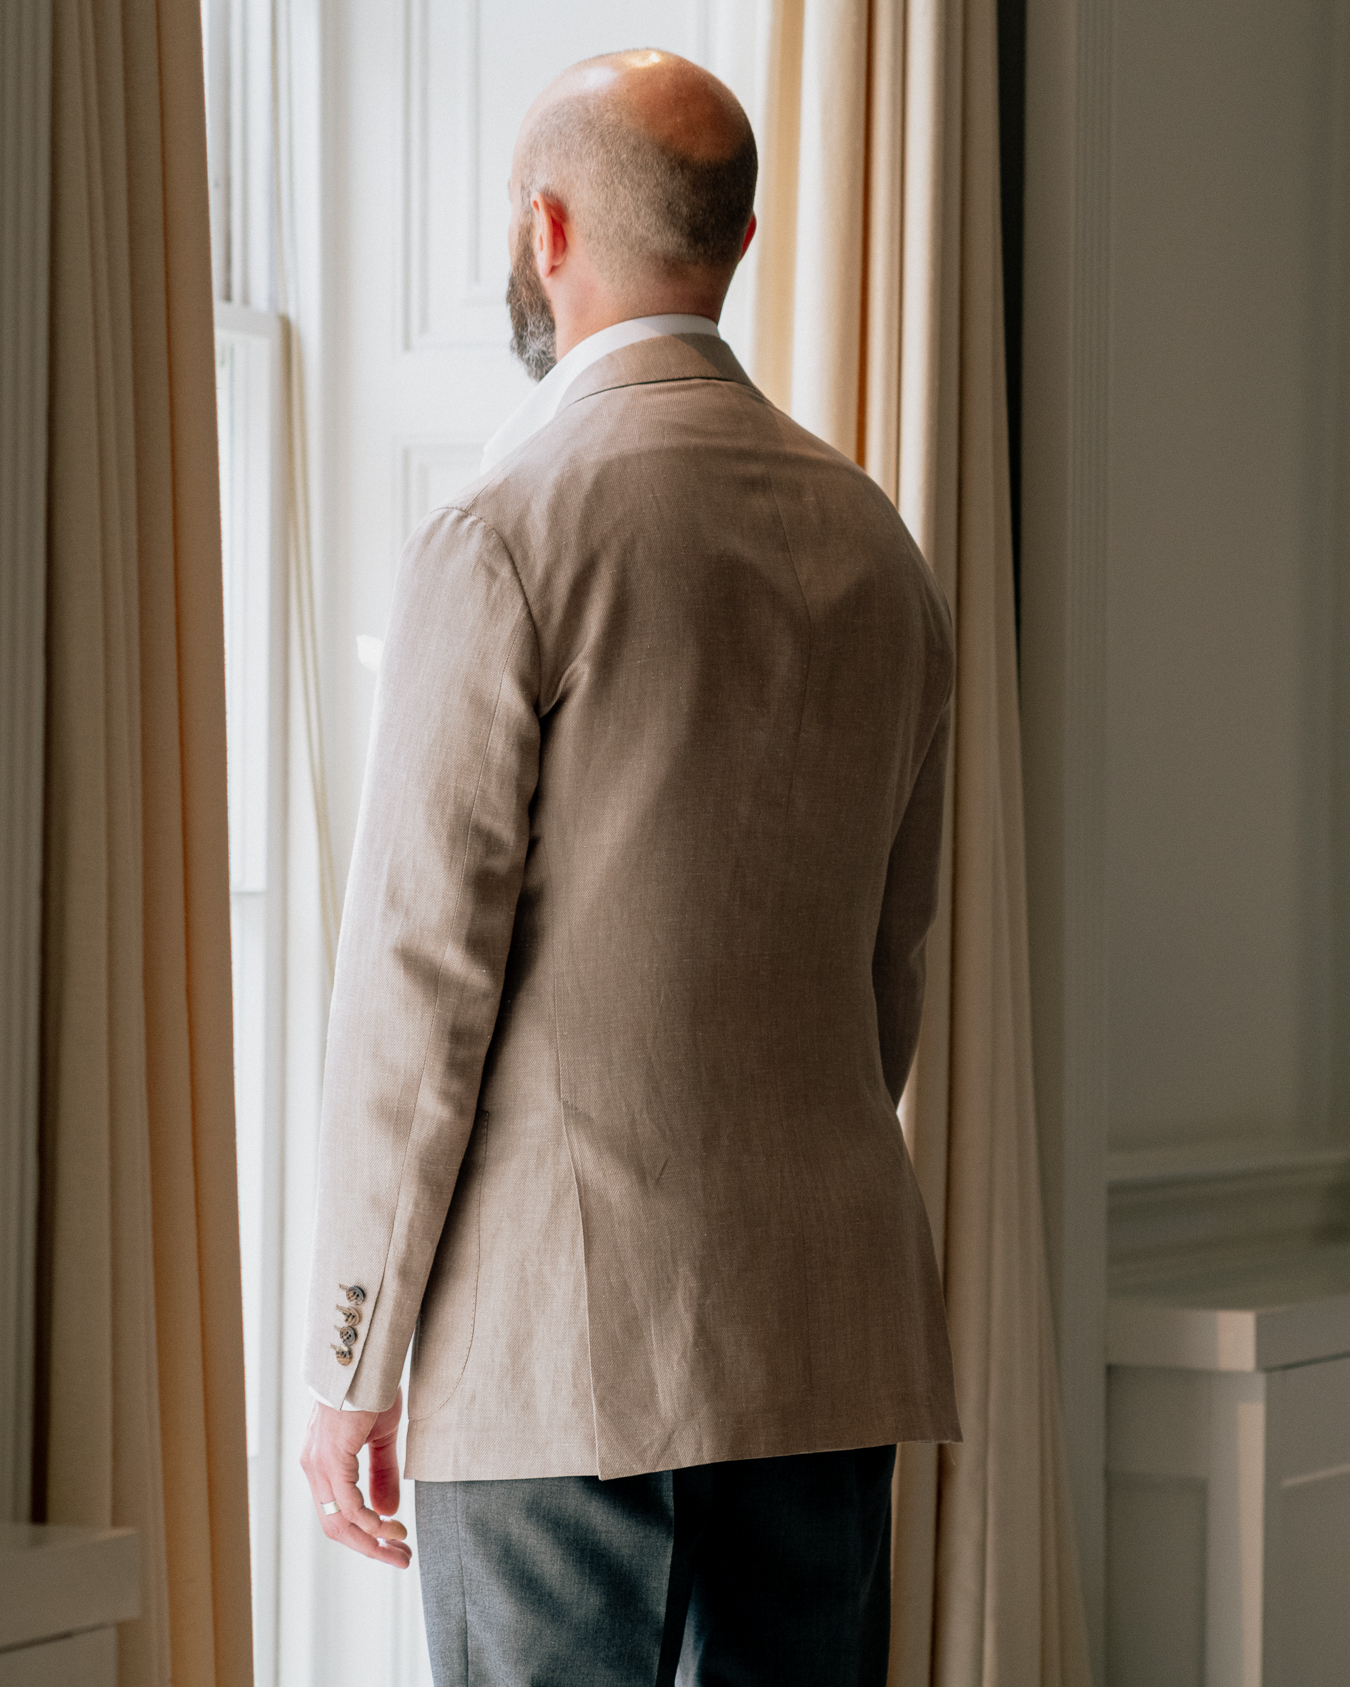 Brioni bespoke tailoring – Permanent Style